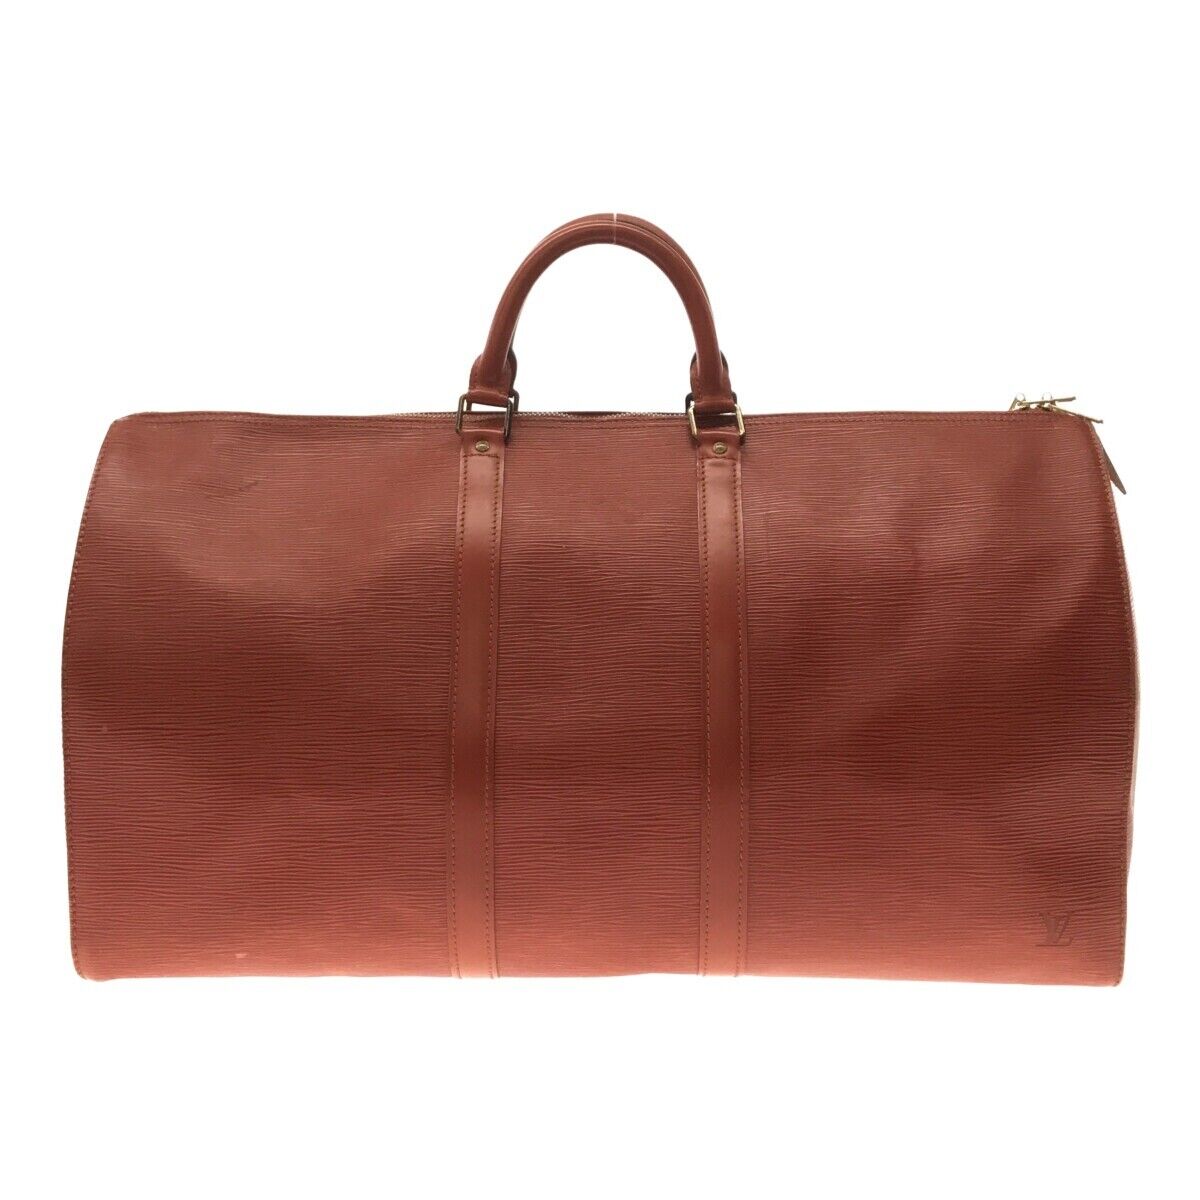 Louis Vuitton Keepall 50 Travel Bag in Black EPI Leather